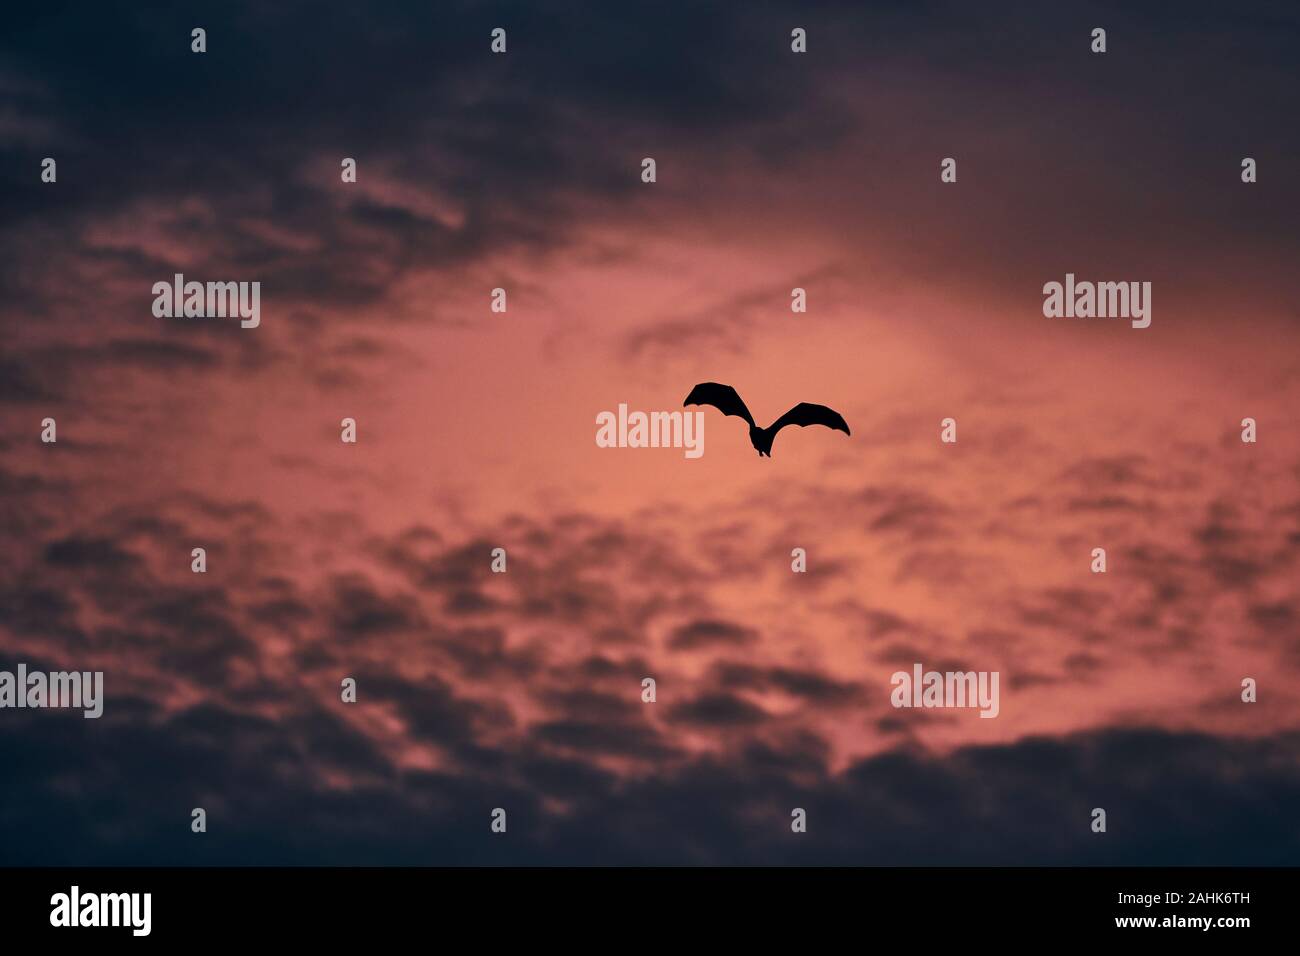 Indian fruit bat (species of flying fox) on sky against red sunset. Scary scene at dusk in Sri Lanka. Stock Photo